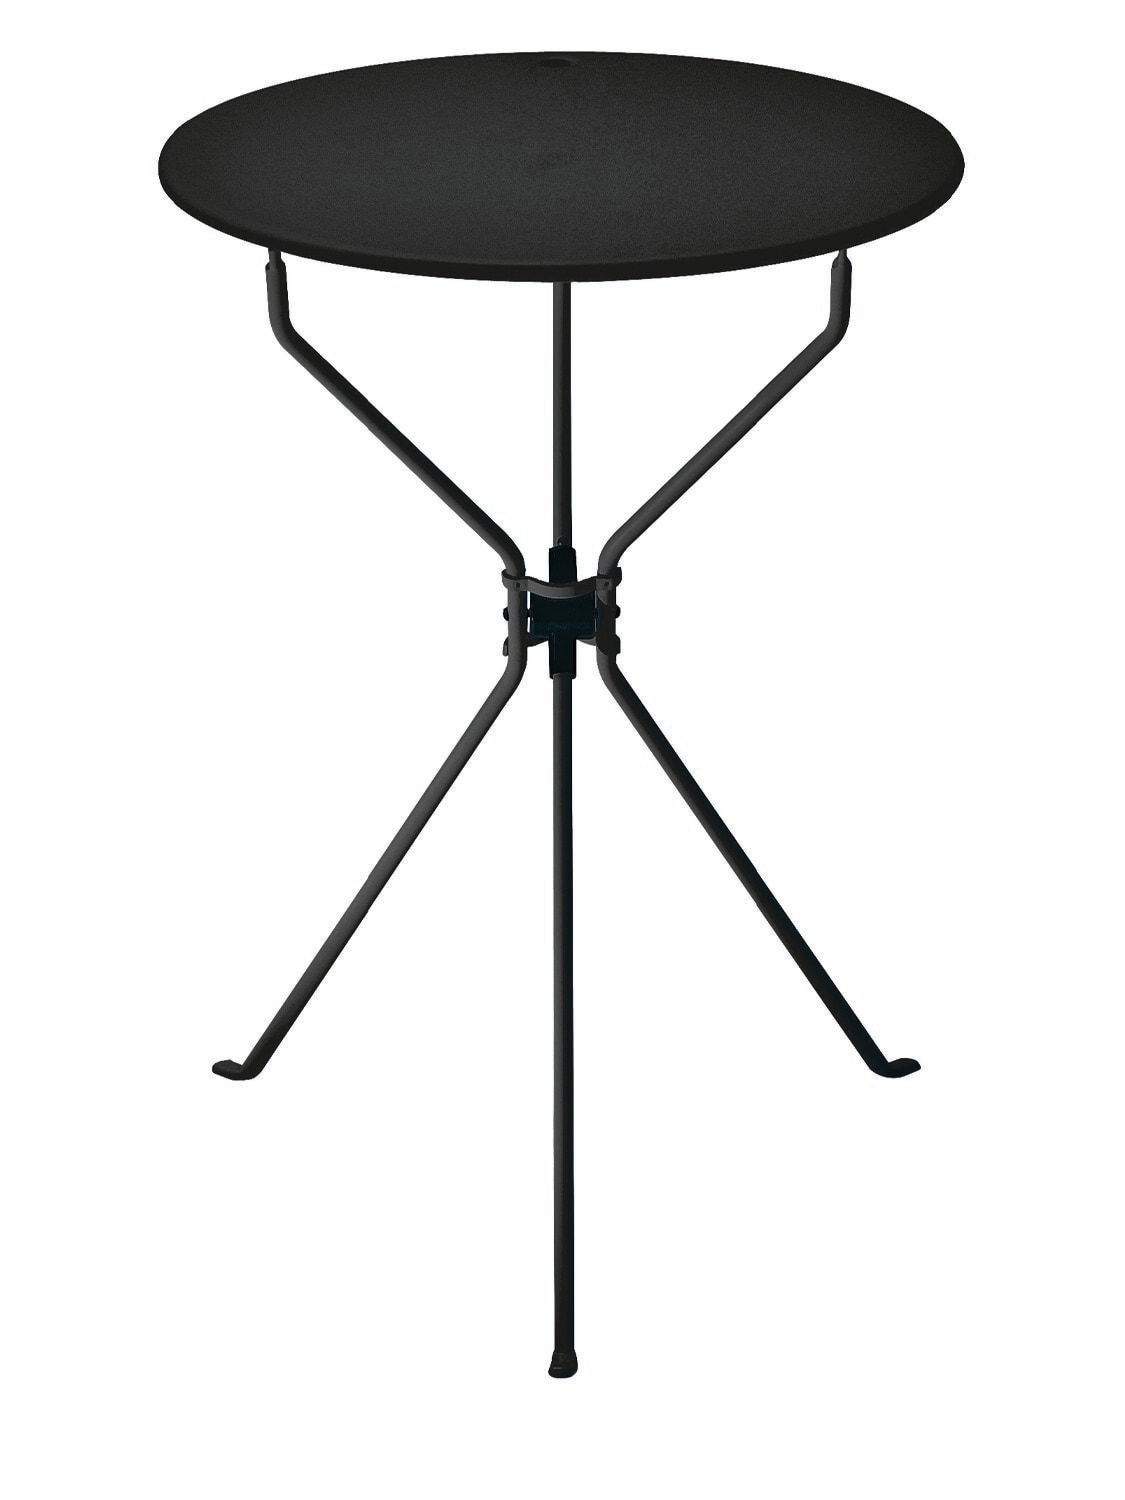 Zanotta Cumano Foldable Table In Black